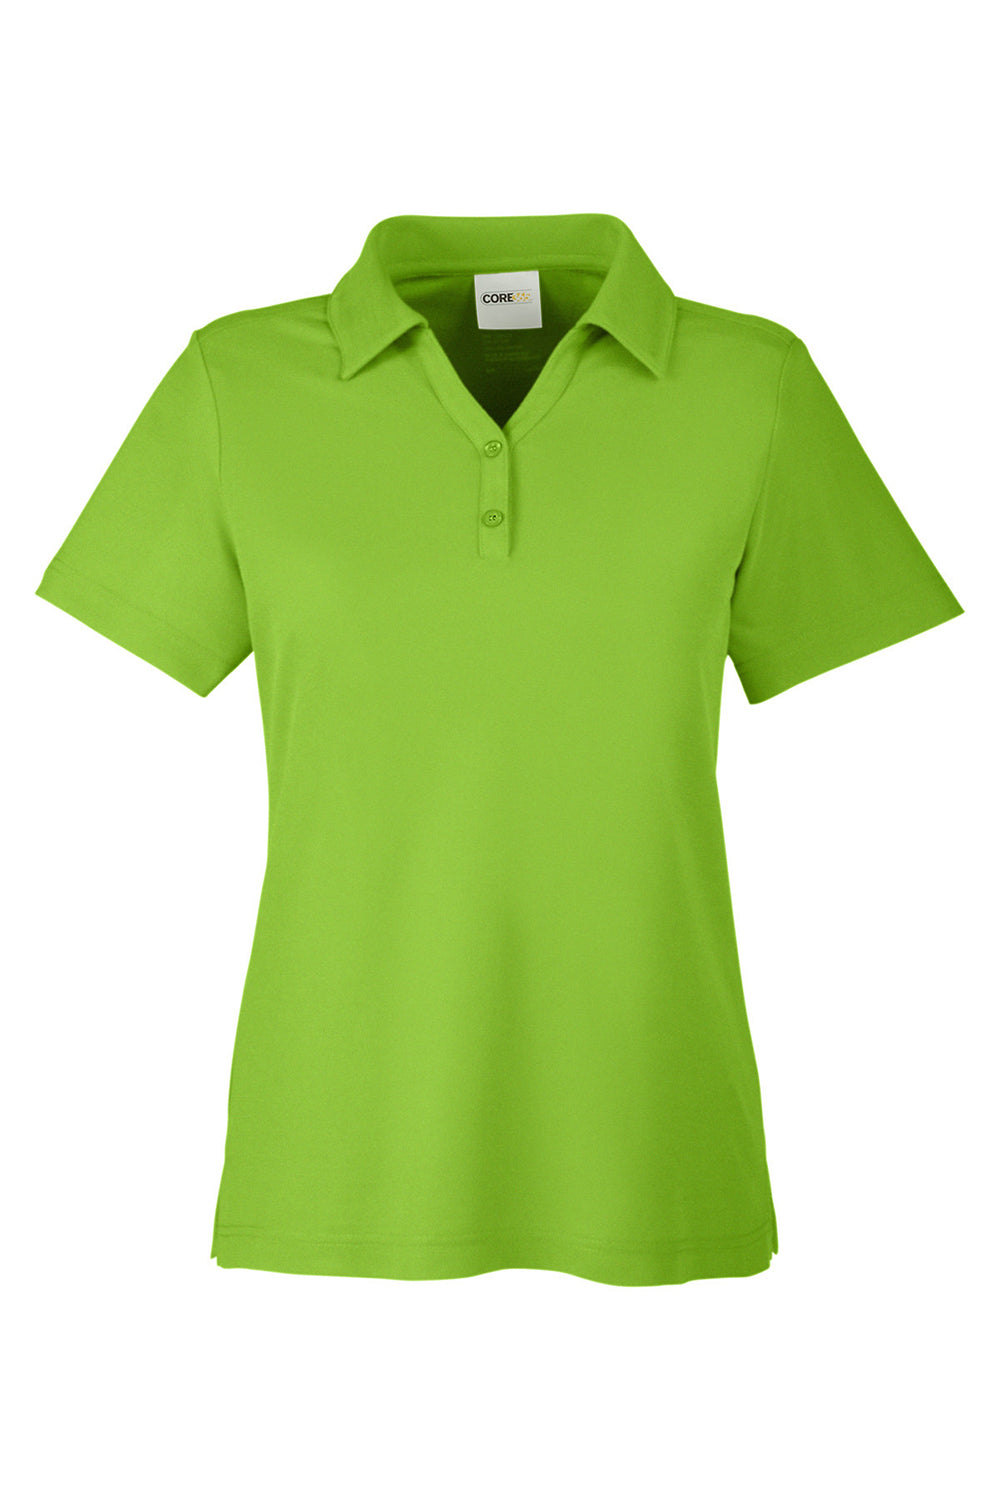 Core 365 CE112W Womens Fusion ChromaSoft Performance Moisture Wicking Pique Short Sleeve Polo Shirt Acid Green Flat Front